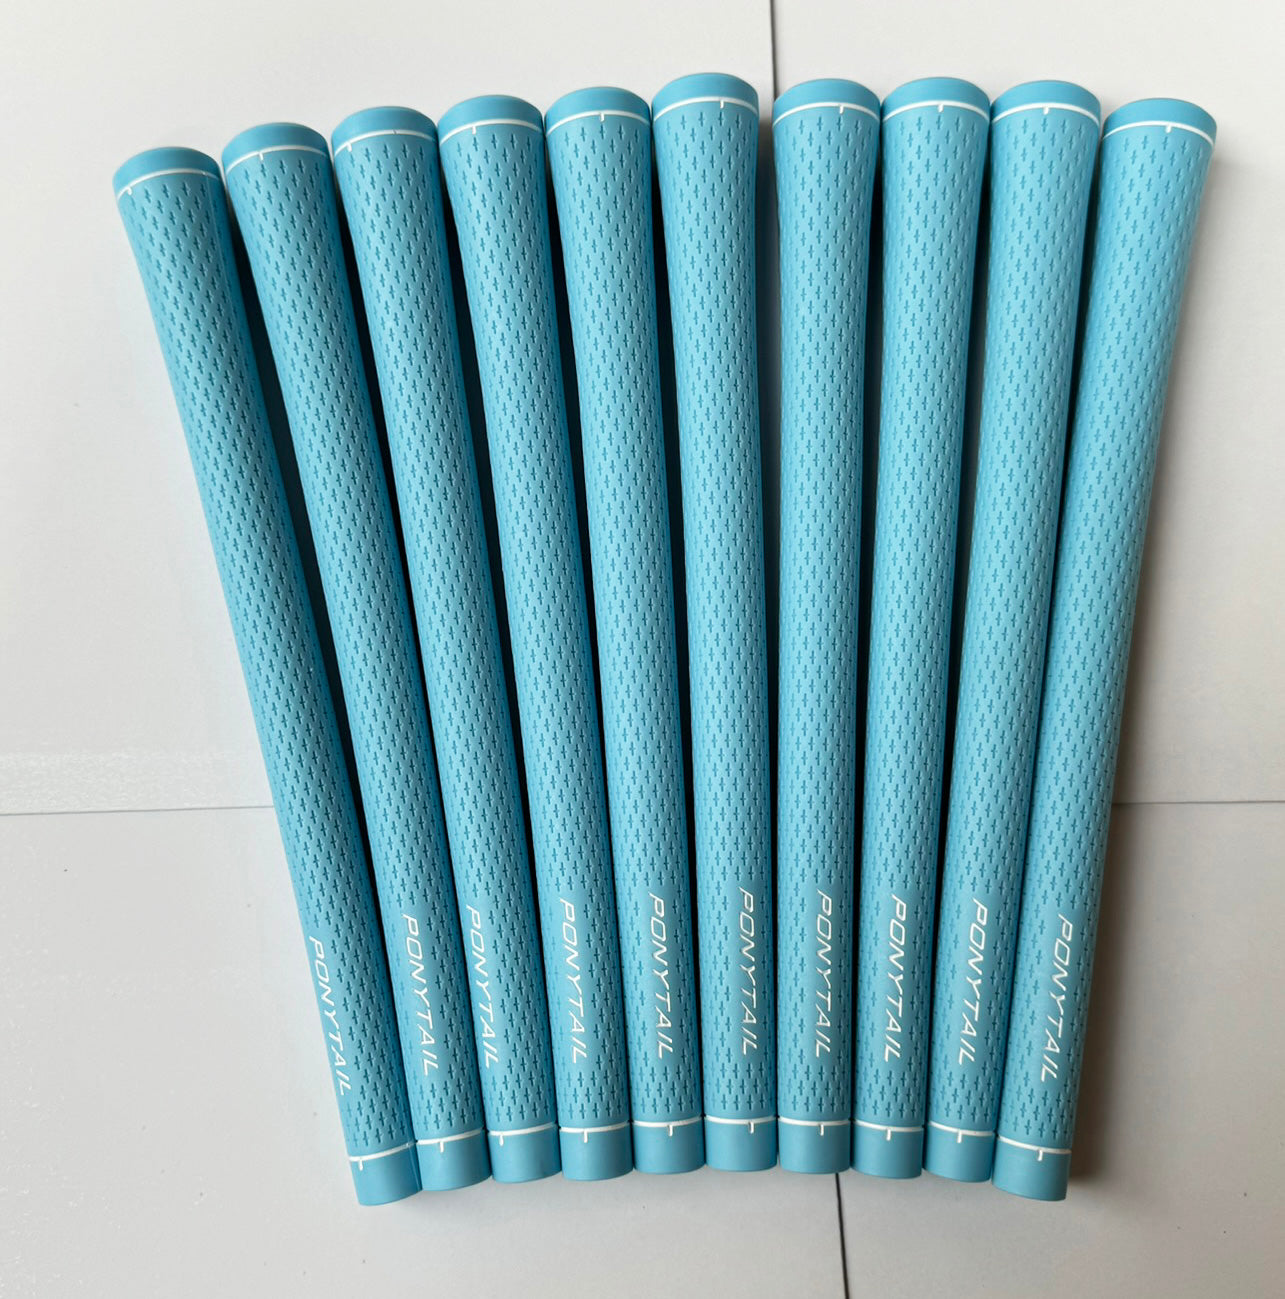 Ladies Golf Grip Undersize Golf Grip Blue Set of 10 with Professional Golf Tape